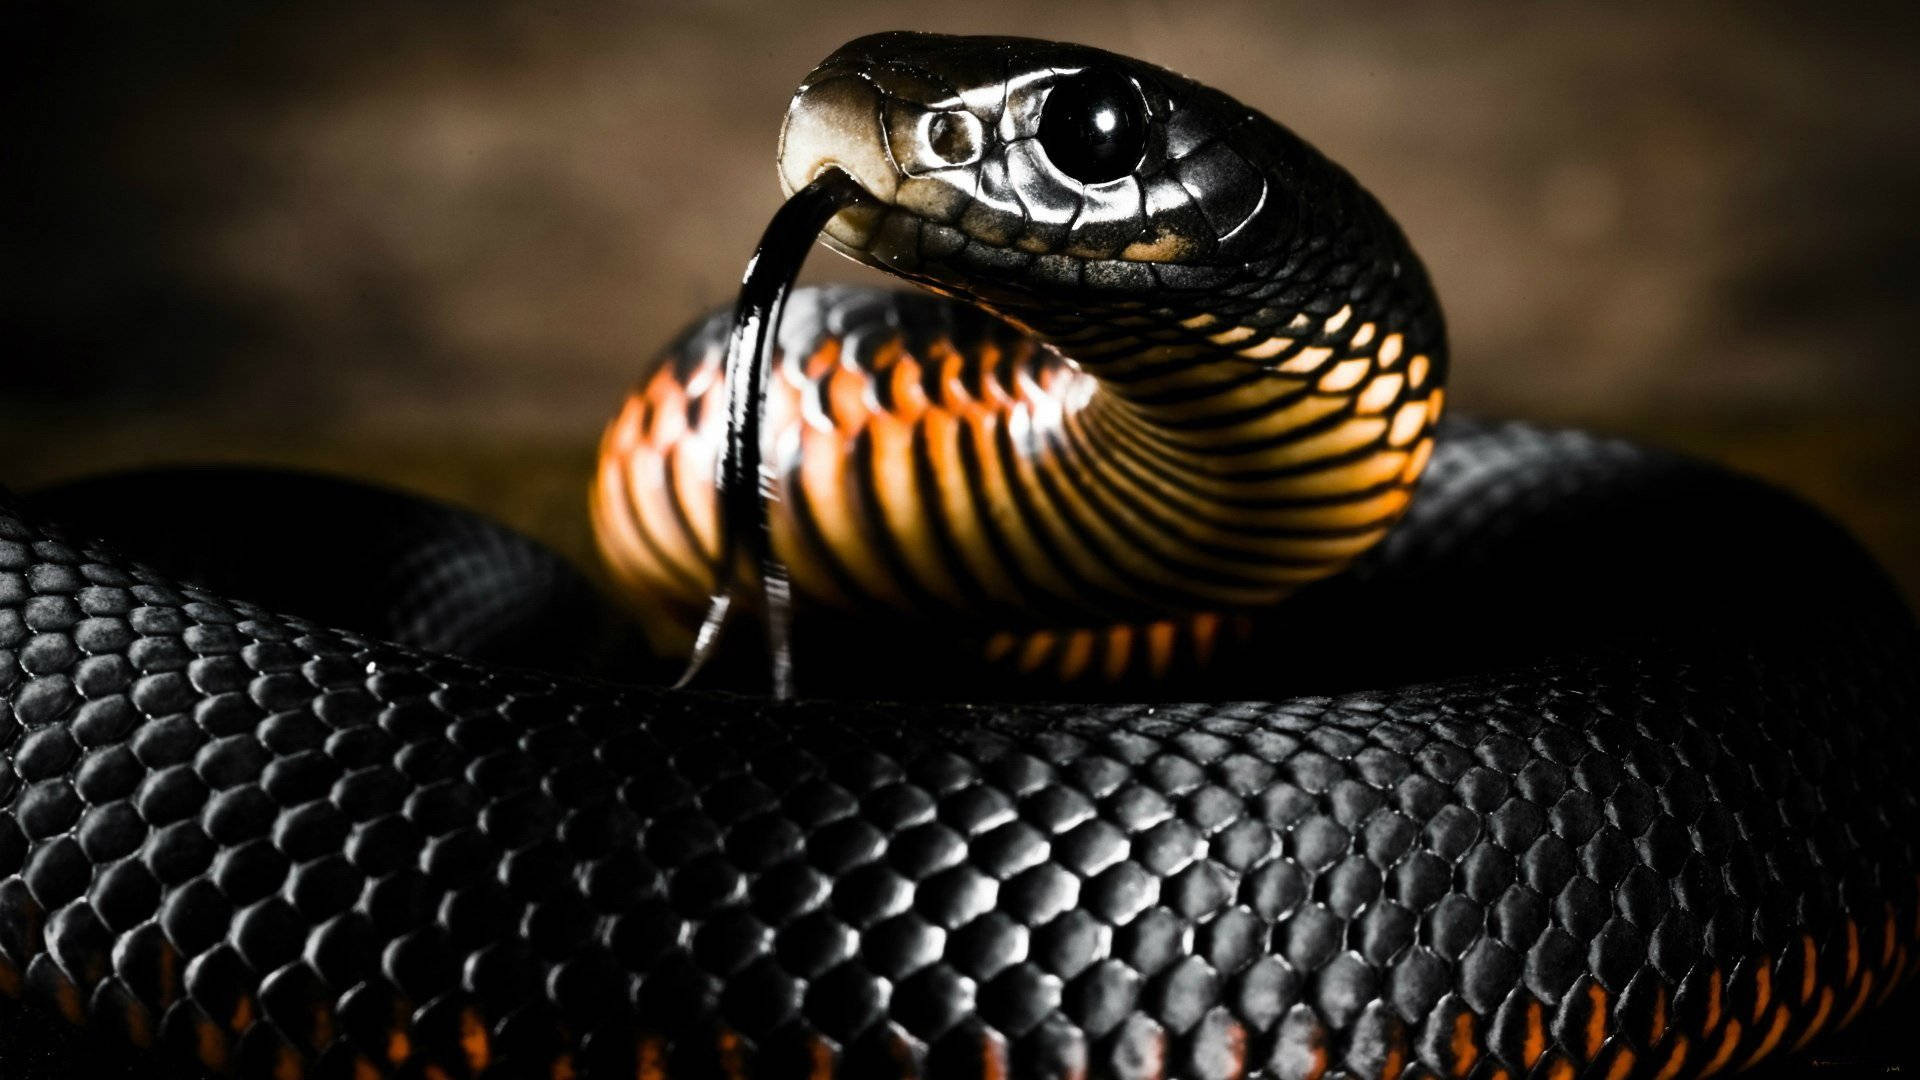 Captivating Image of an Orange and Black Mamba Snake Wallpaper